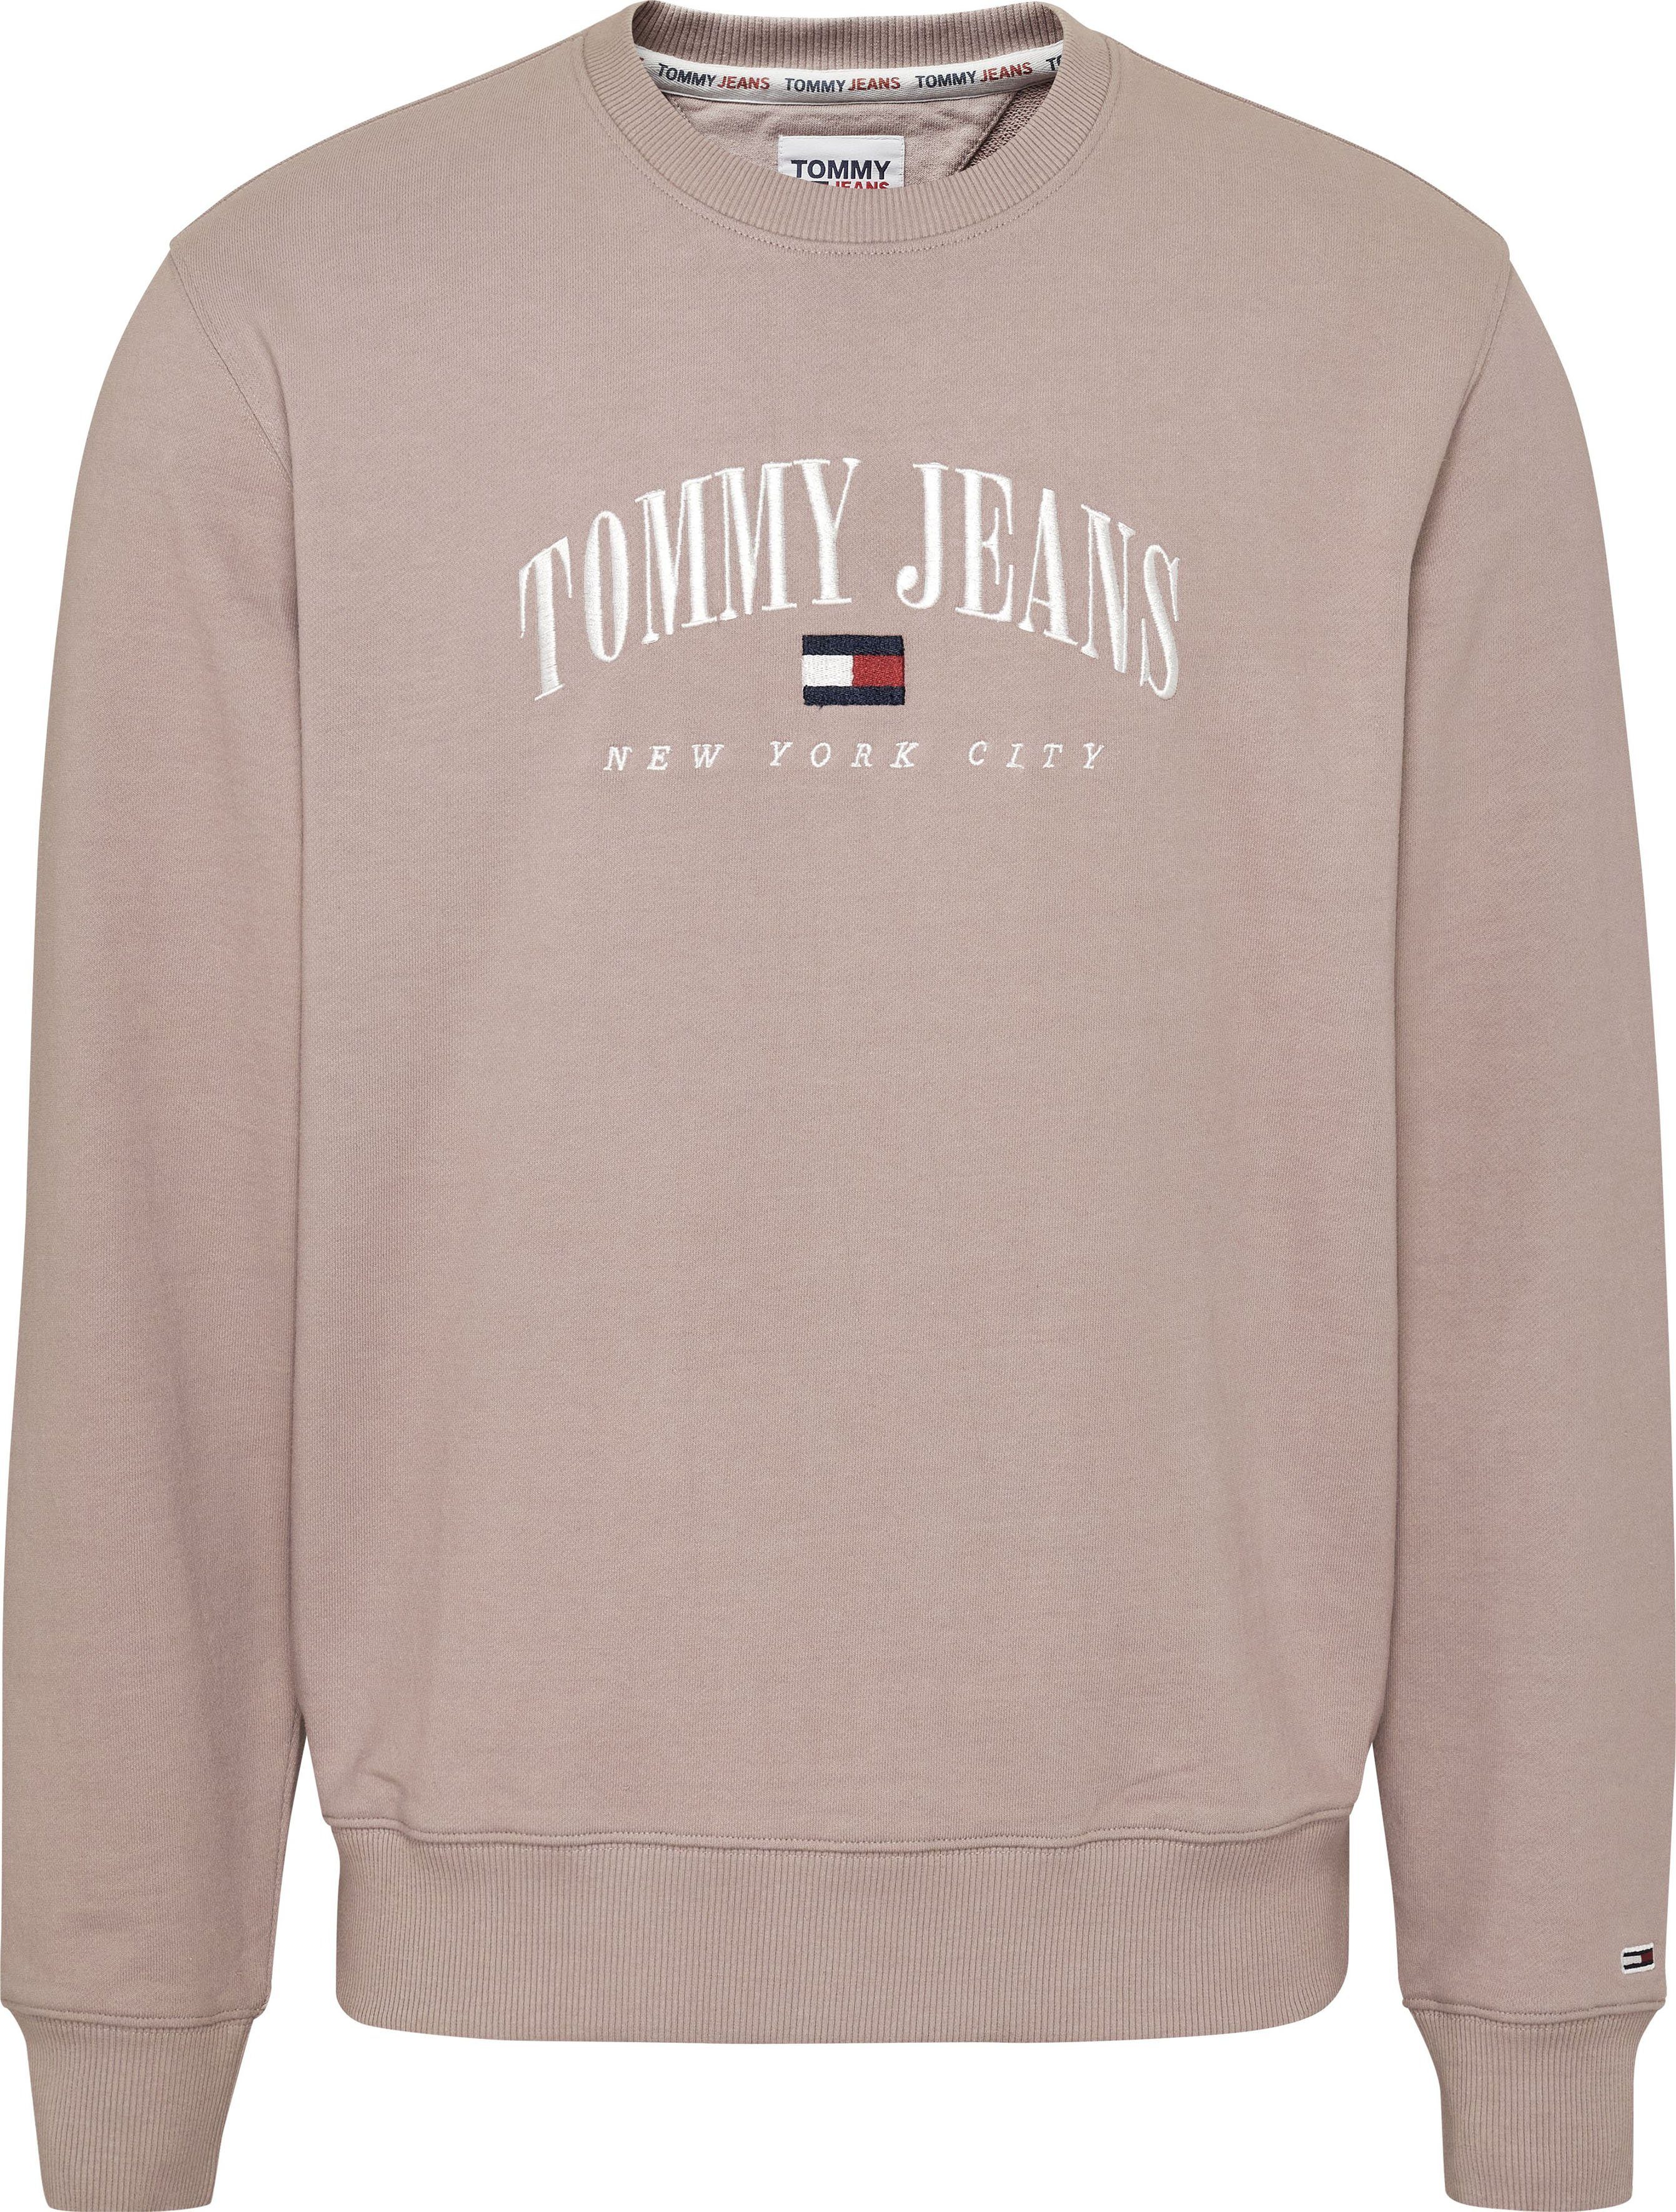 SMALL TJM RUndhalsausschnitt VARSITY CREW Stone Tommy REG Jeans Brandons mit Sweatshirt